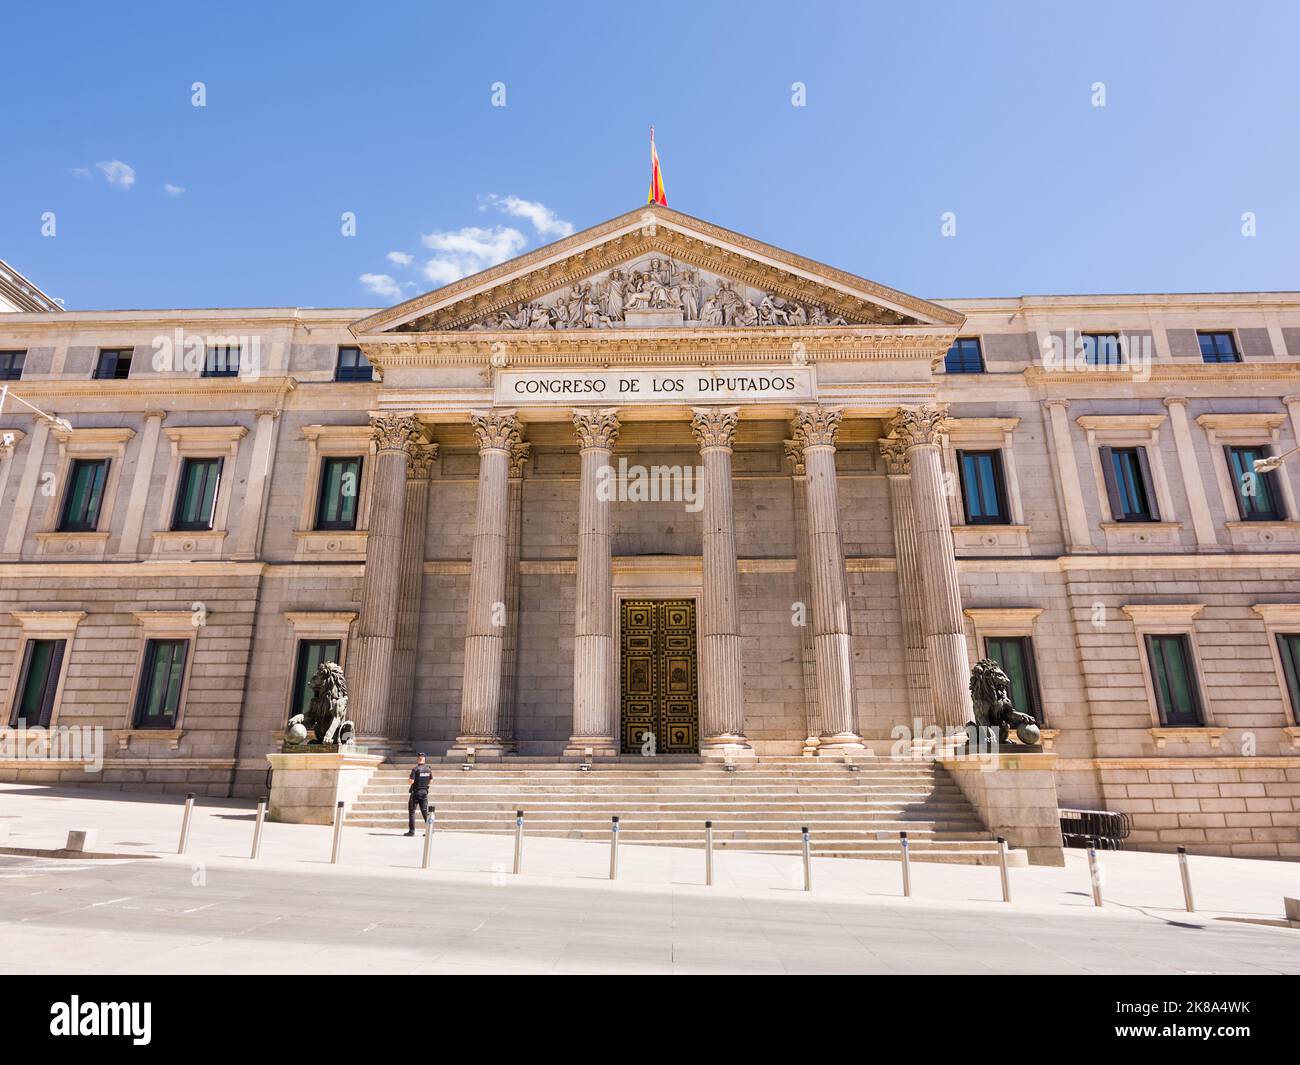 Palace of Deputies in Madrid (translation: congress of deputies) Stock Photo